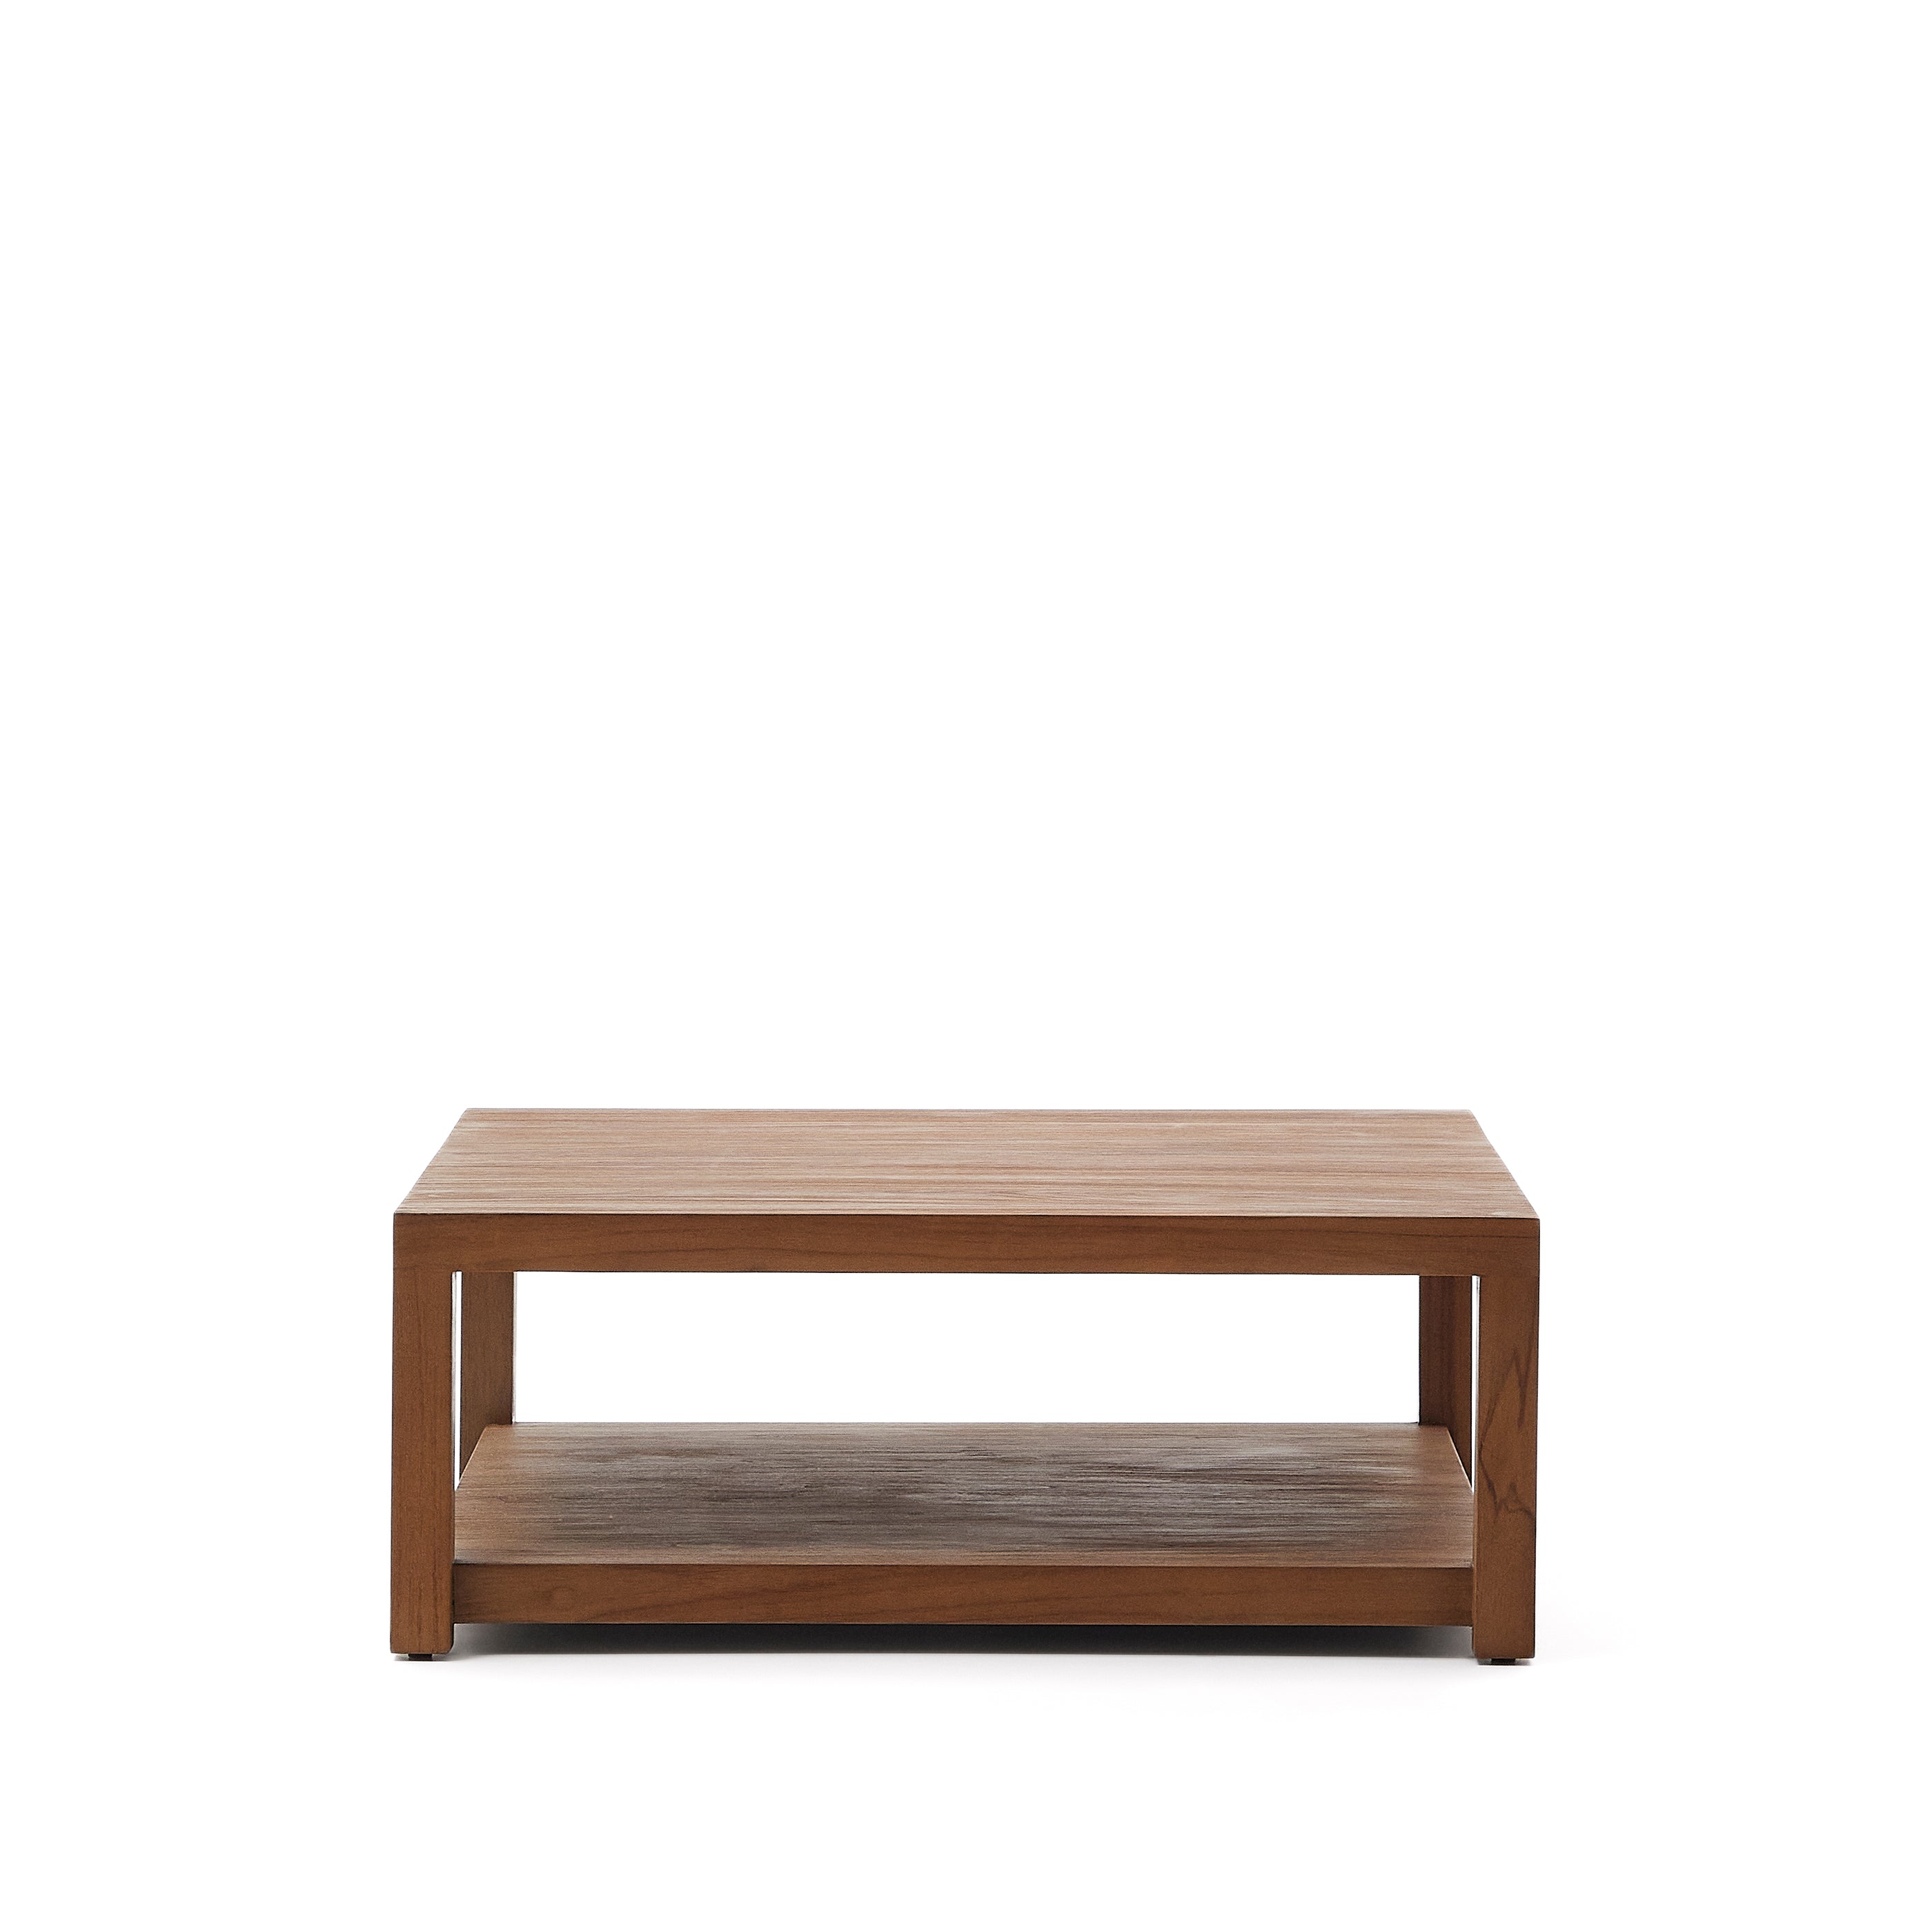 Sashi side table, made of solid teak, 90 x 90 cm